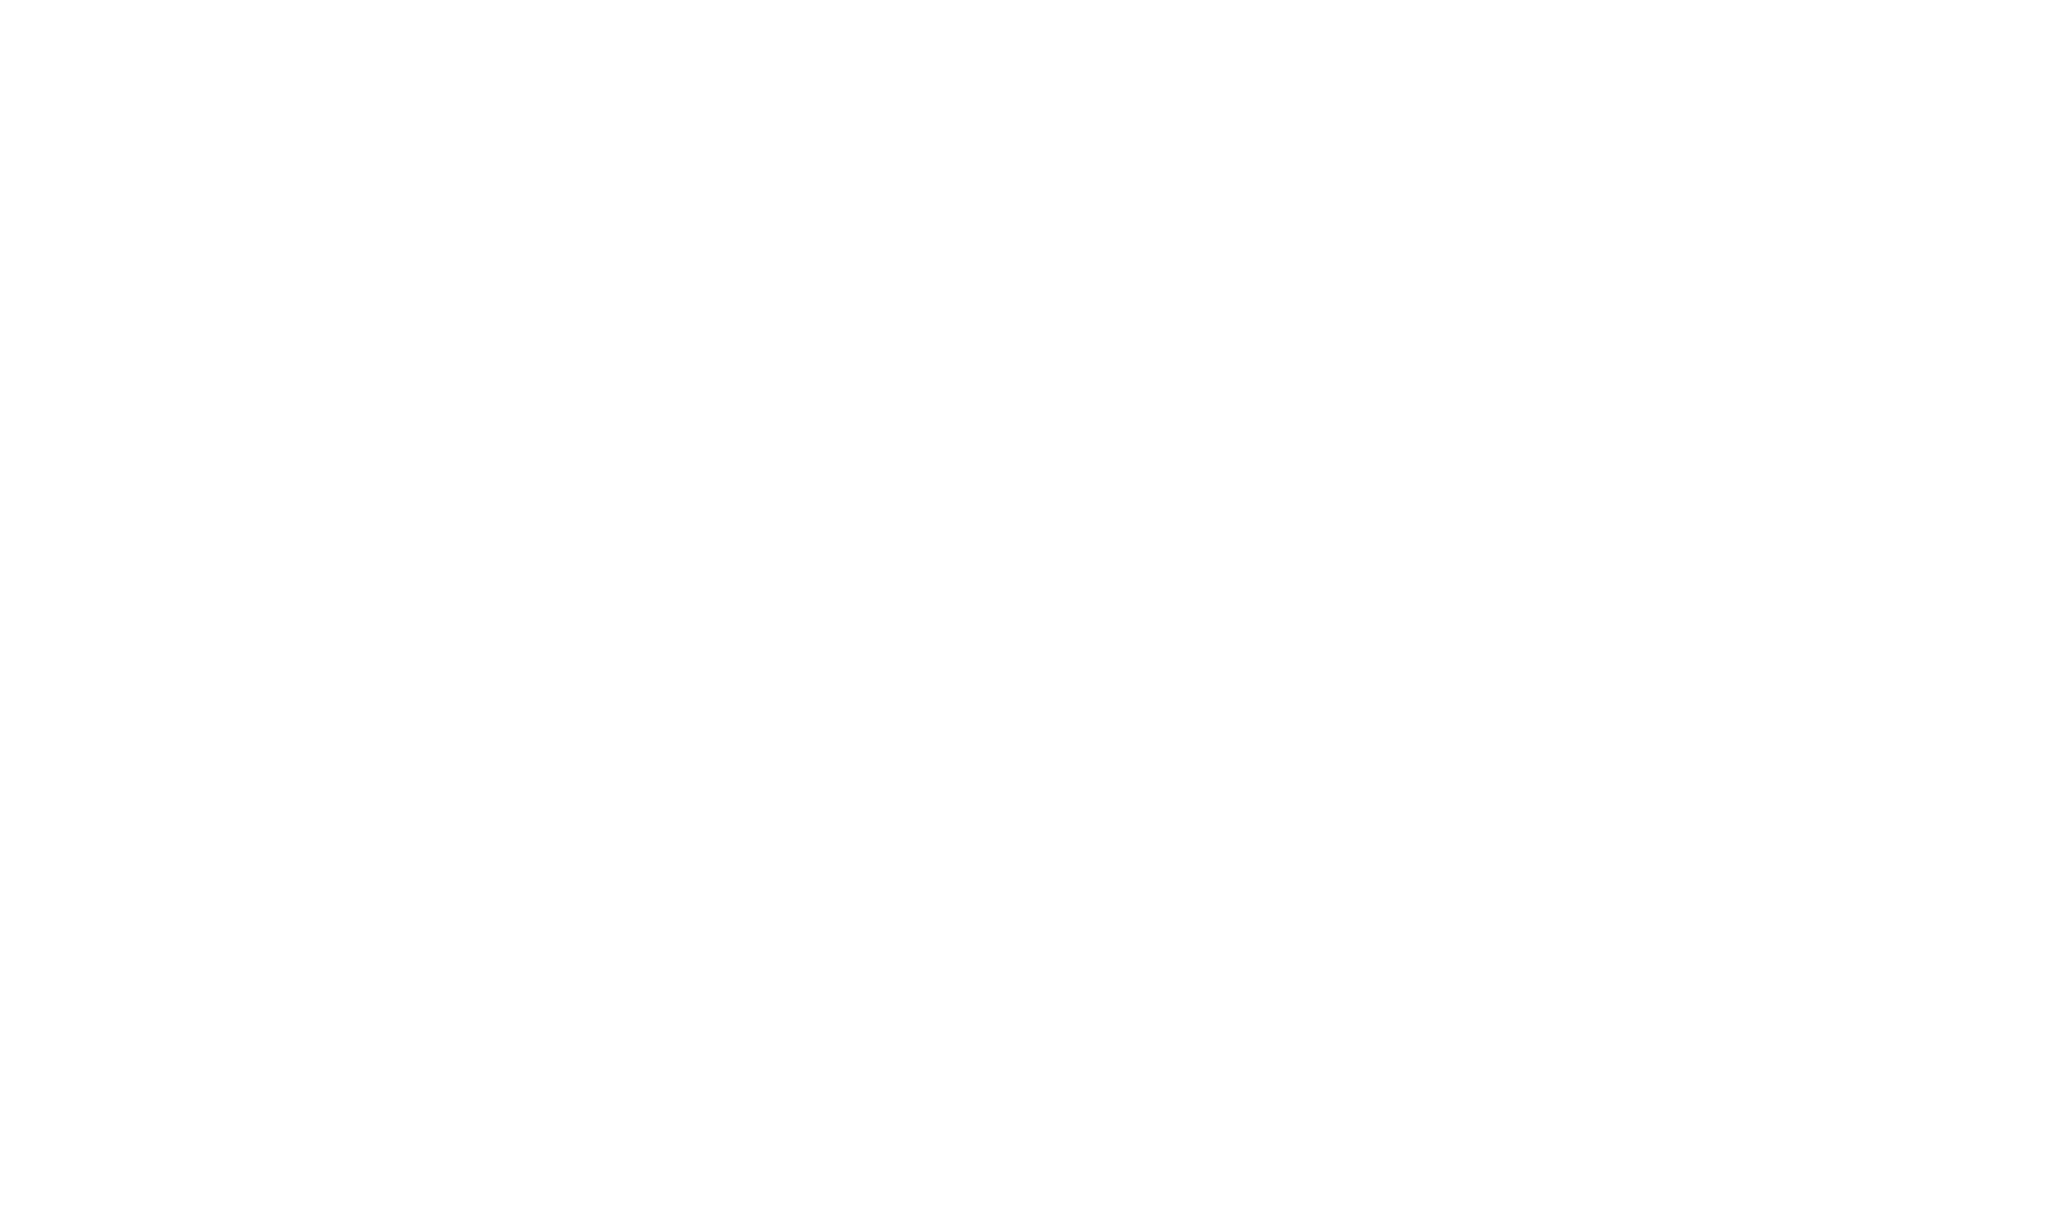 The wanda group logo